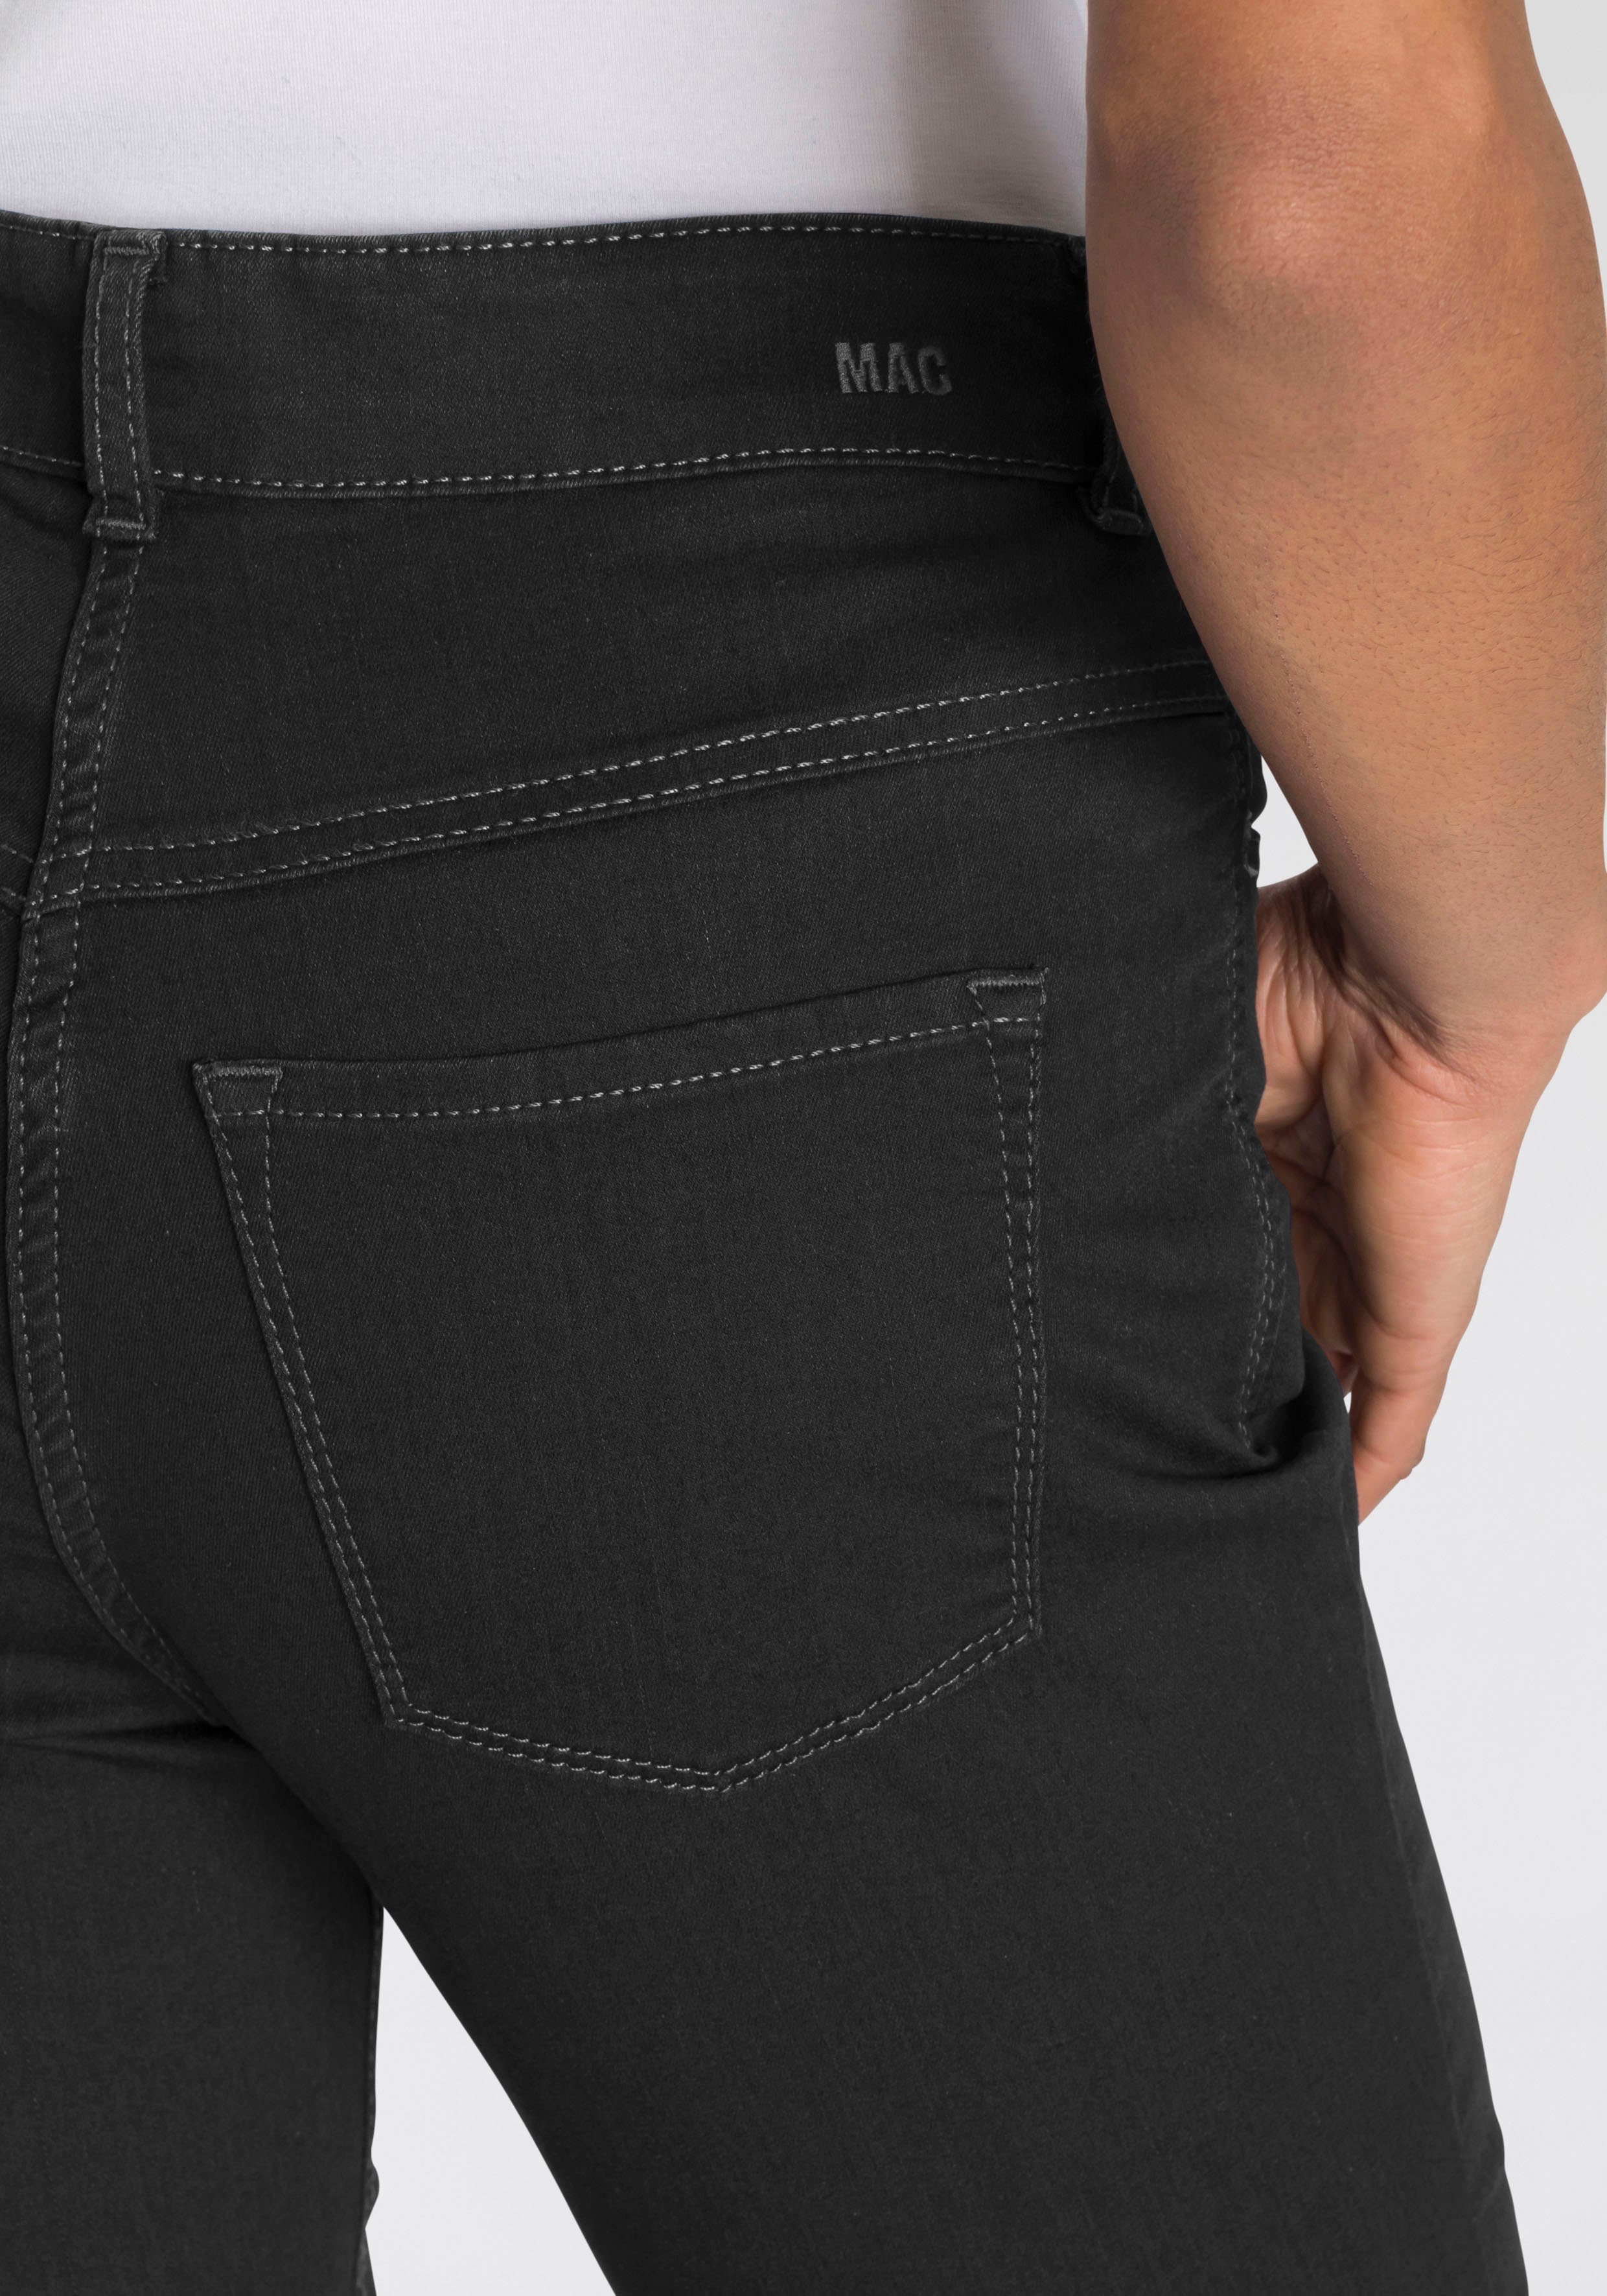 Tag Hiperstretch-Skinny sitzt black-black den Qualität MAC Power-Stretch bequem ganzen Skinny-fit-Jeans